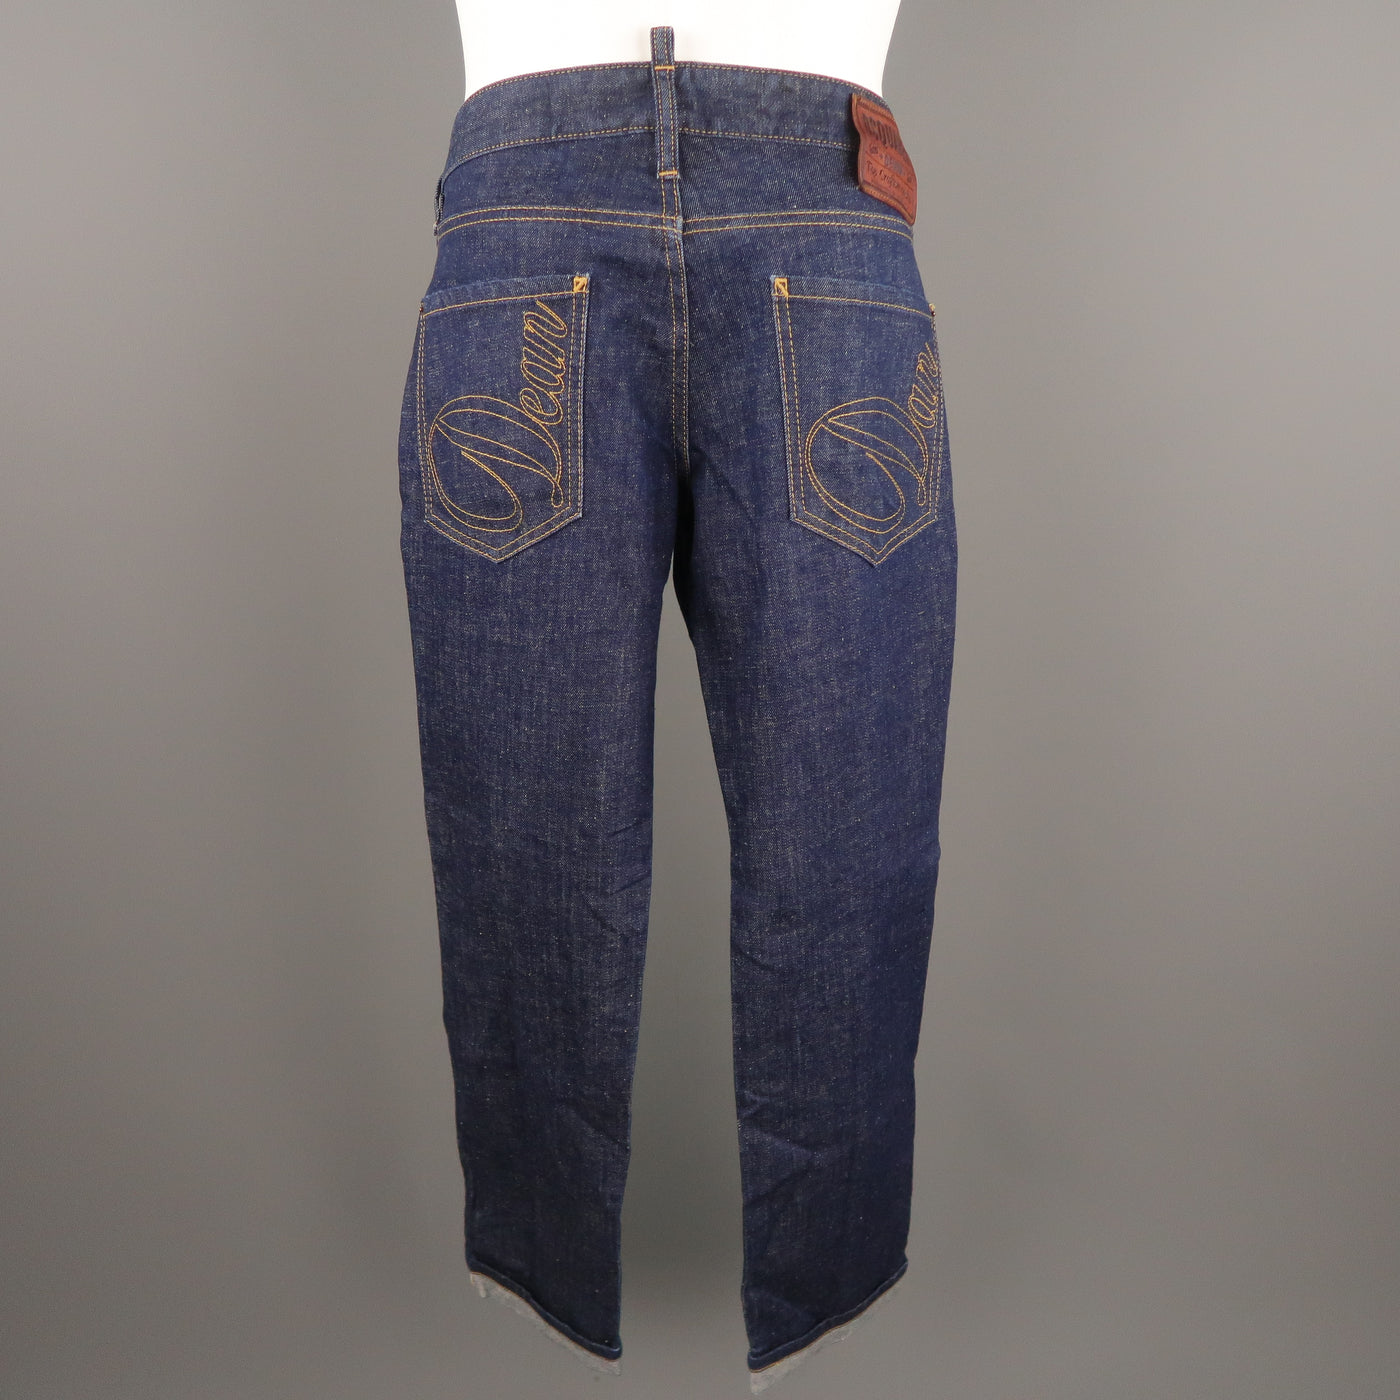 DSQUARED2 Size 32 Indigo Contrast Stitch Selvedge Denim Jeans